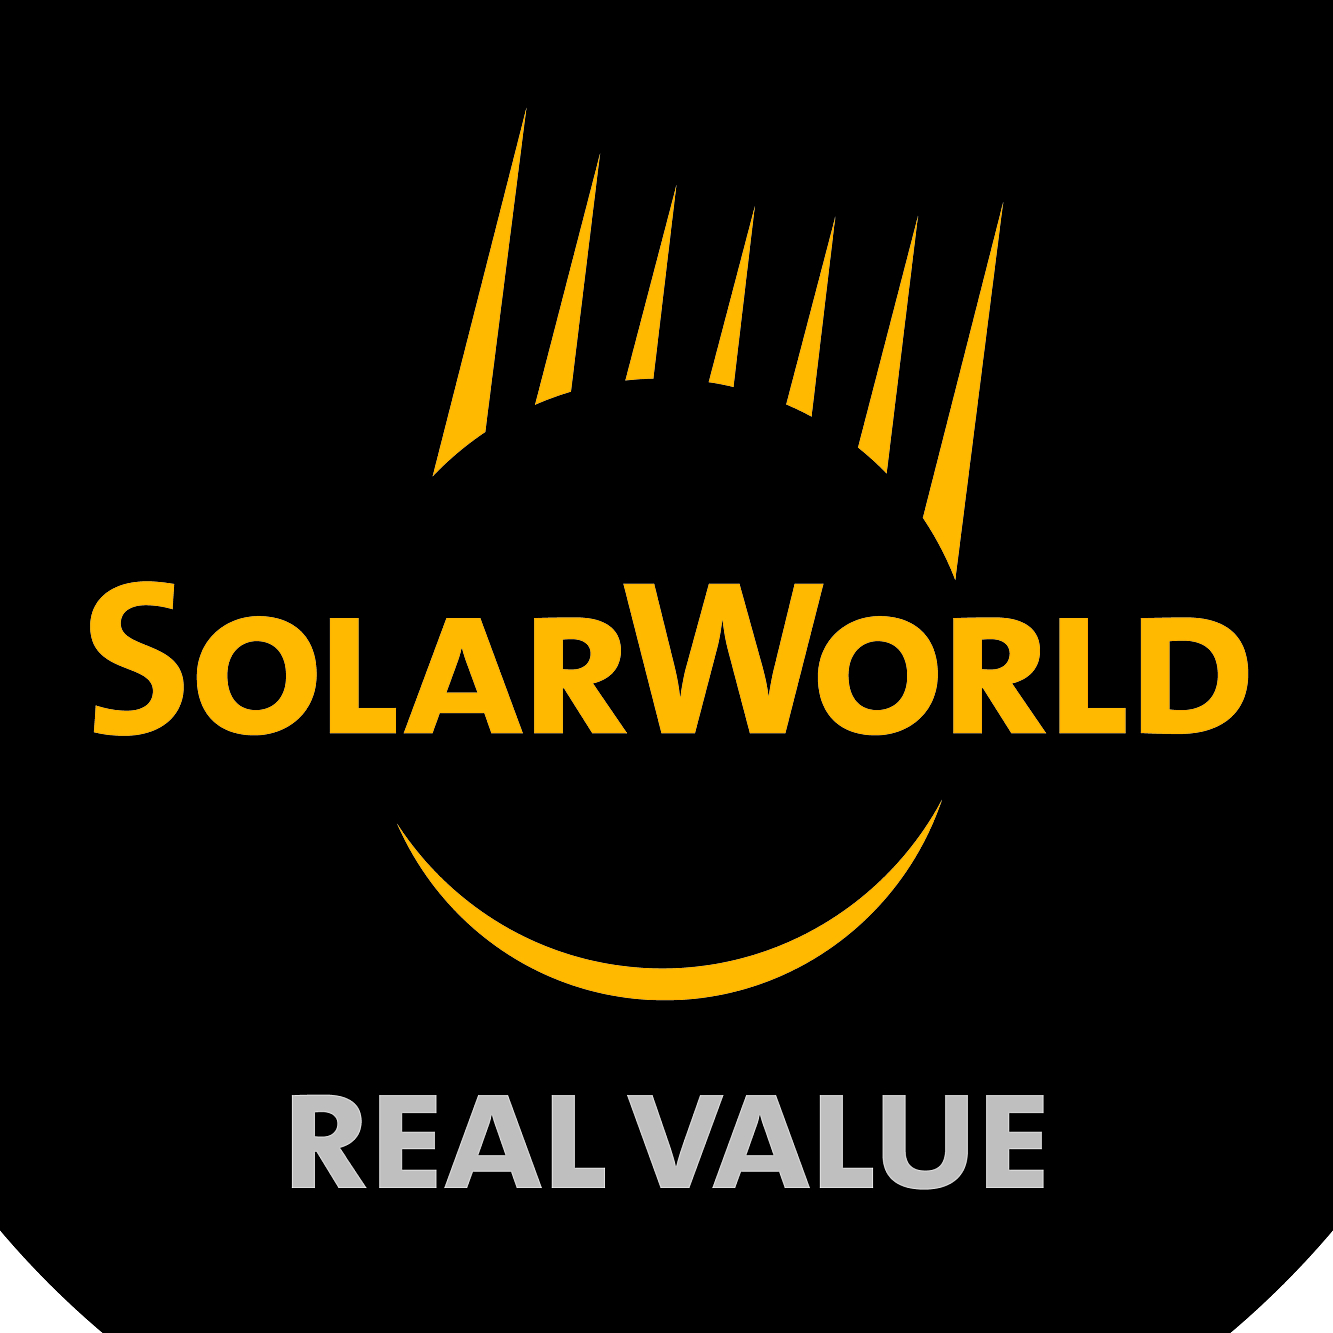 SolarWorld - Wikipedia